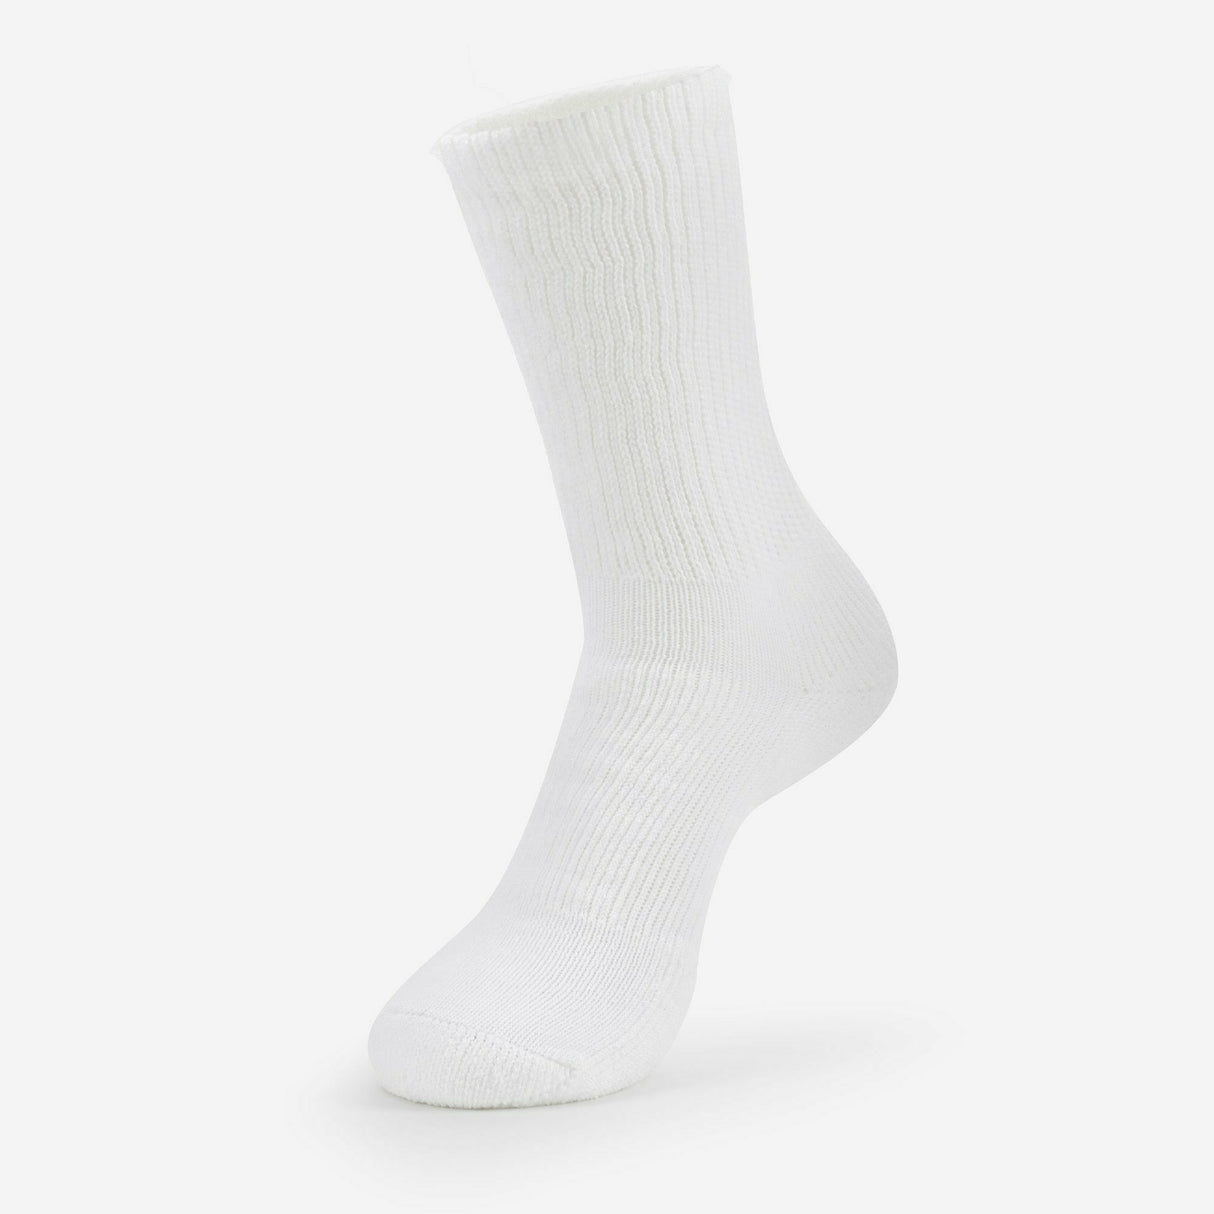 Thorlo Walking Moderate Cushion Crew Socks  -  Small / White / Single Pair